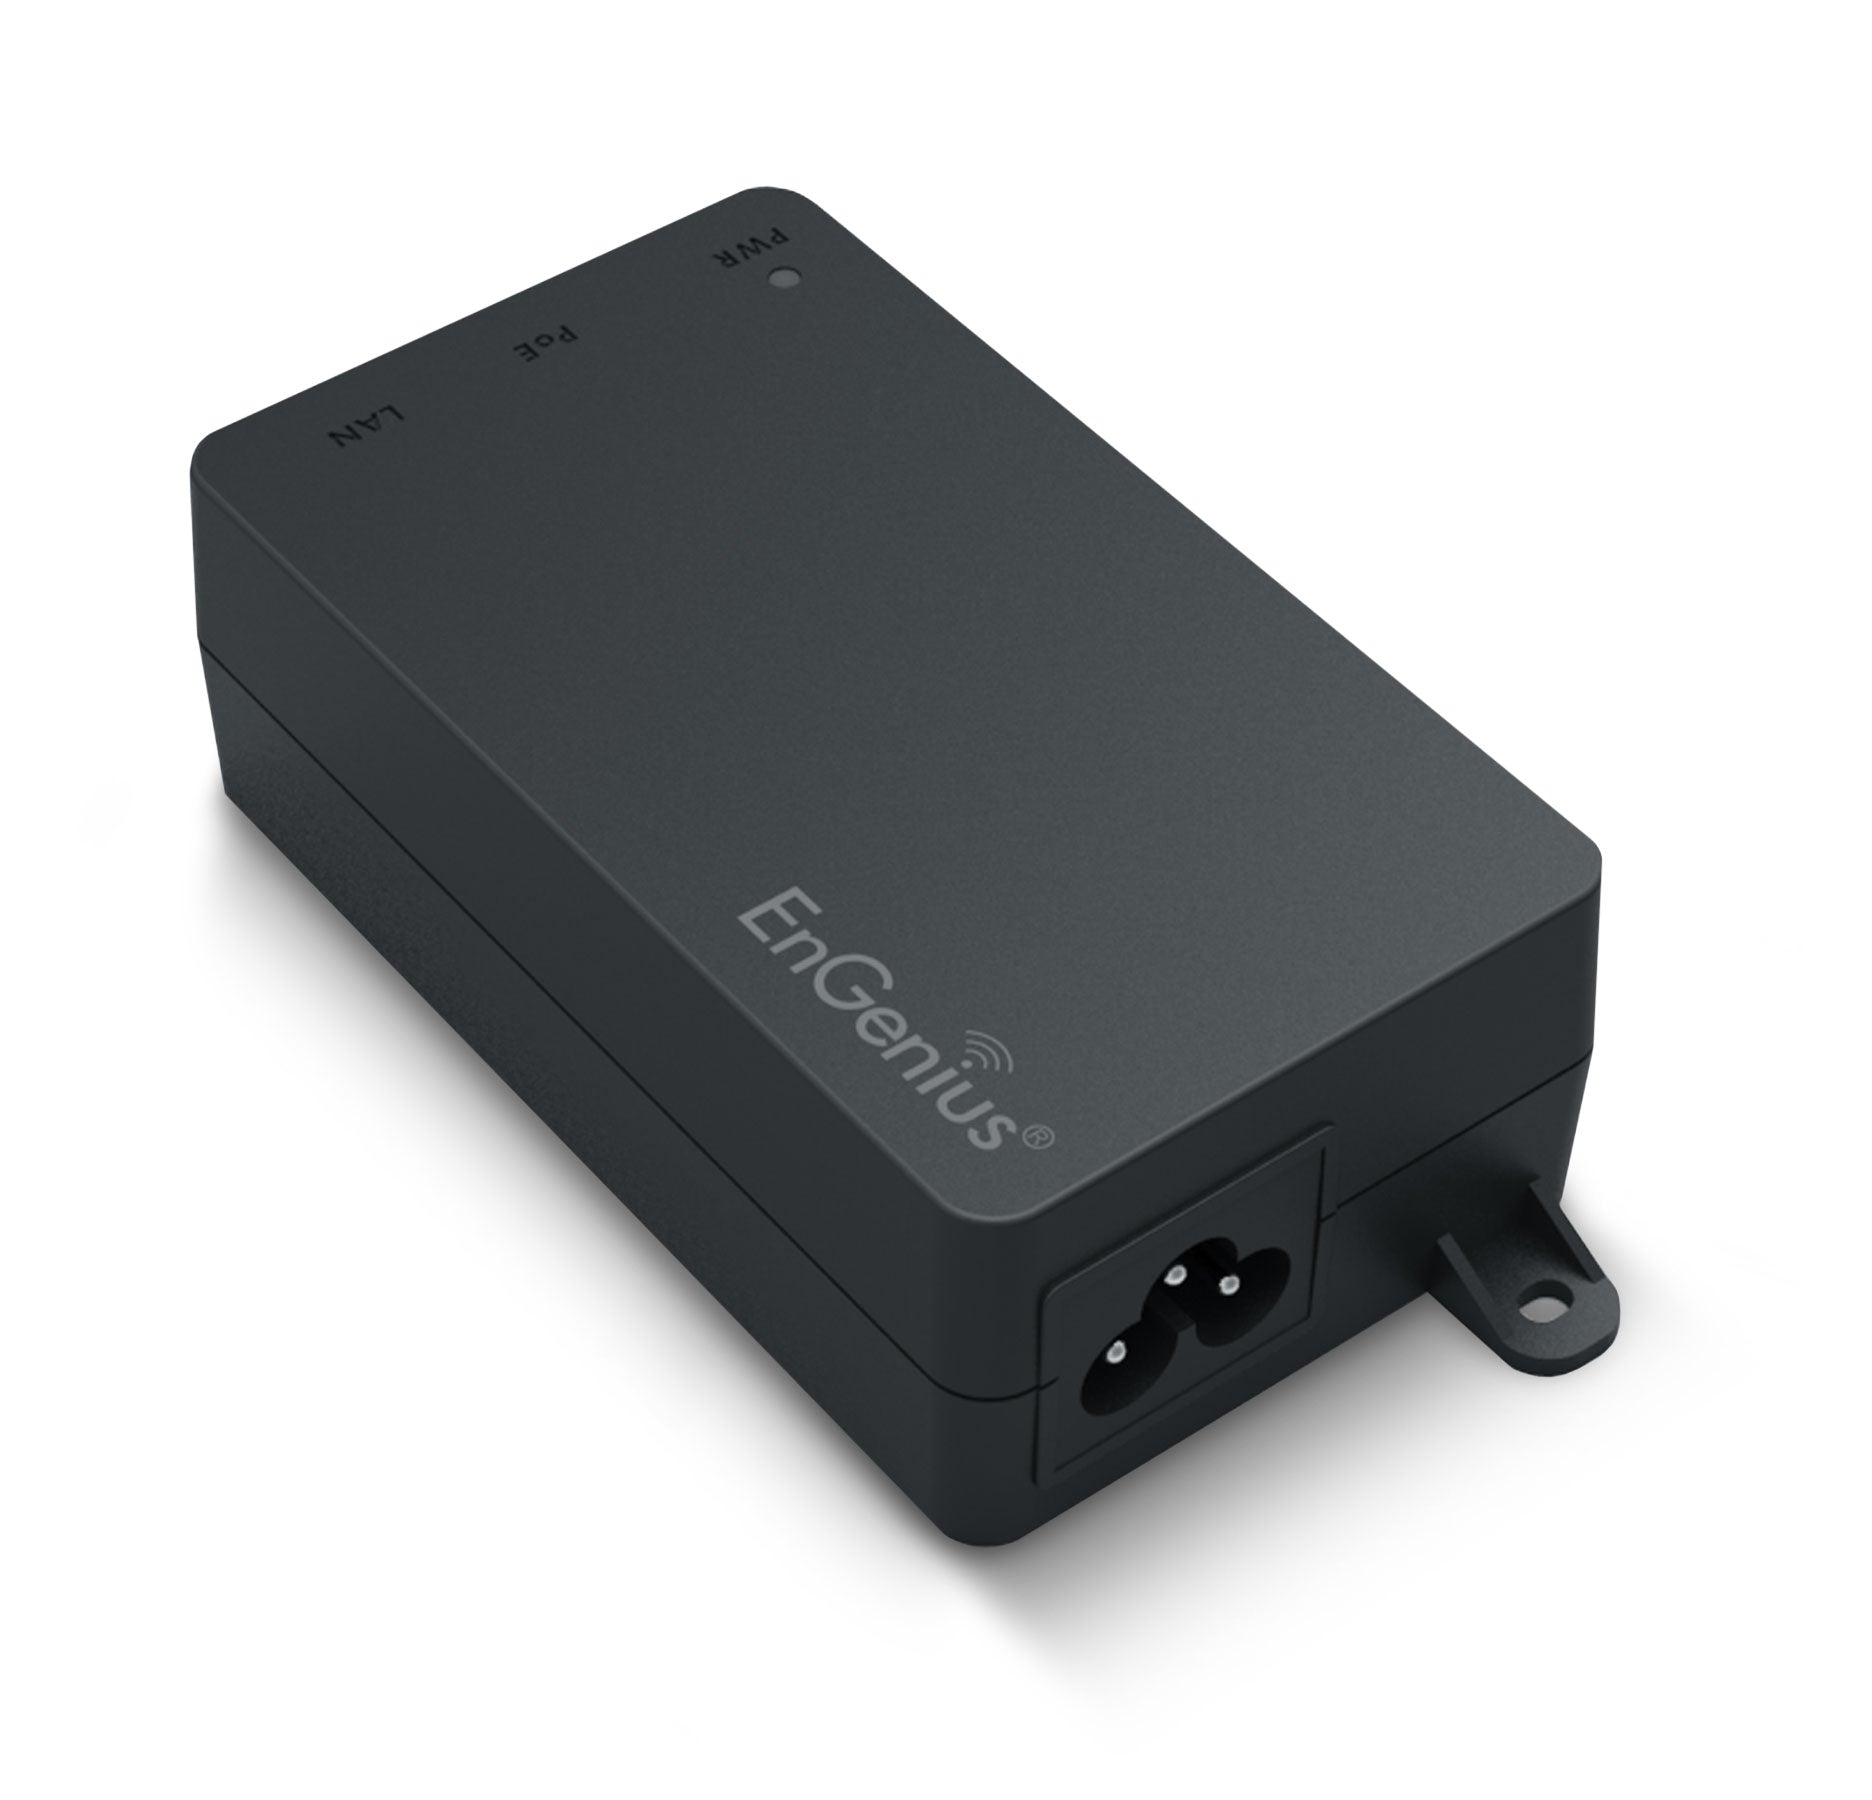 EPA5006GR: Gigabit 32-watt Proprietary PoE Adapter with Reset Button